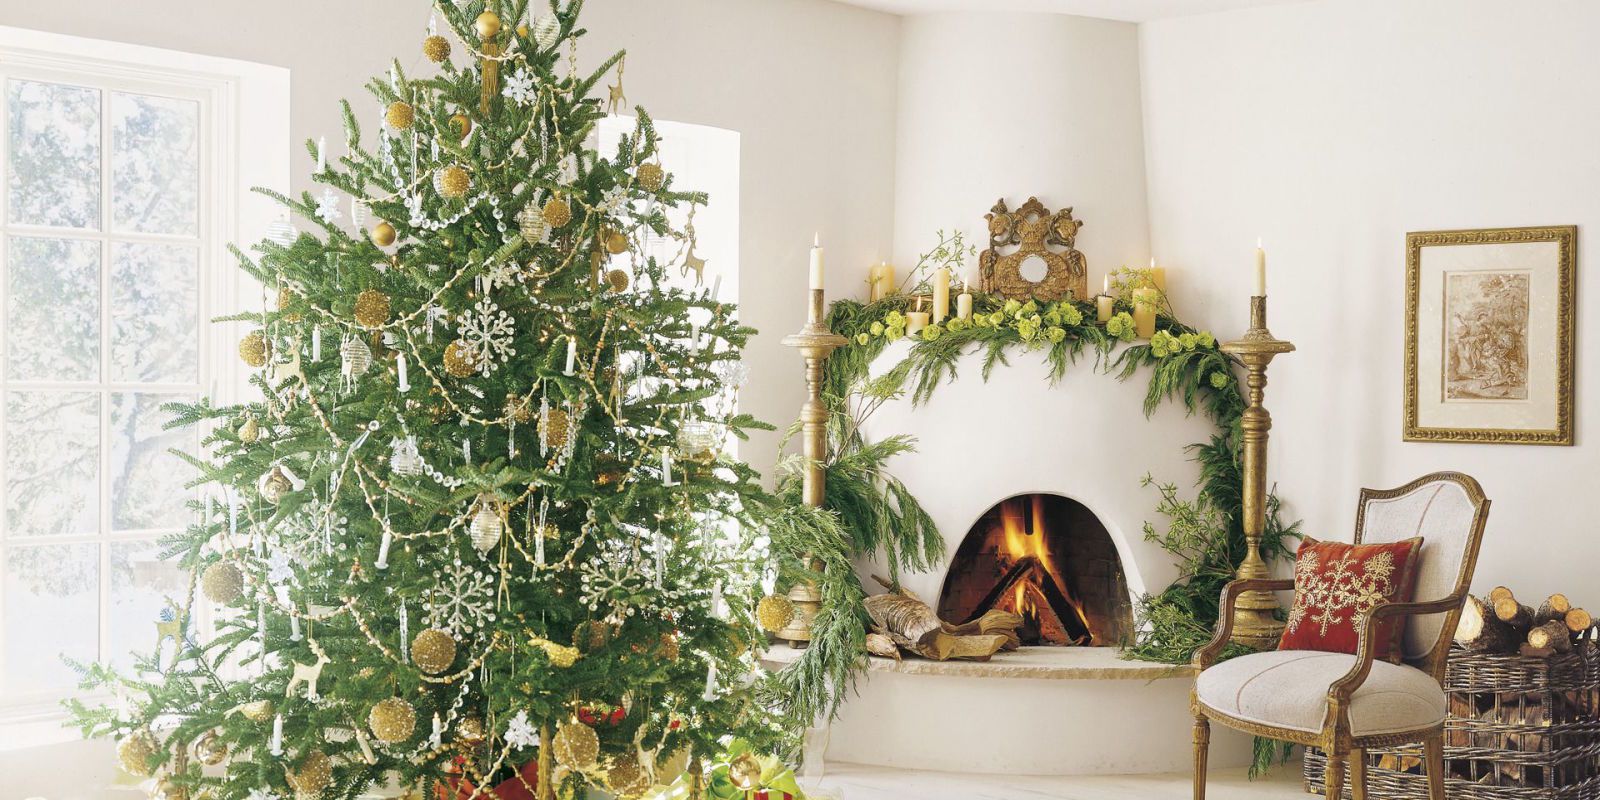 25 Christmas Decoration Ideas - Christmas Decorating Through Three